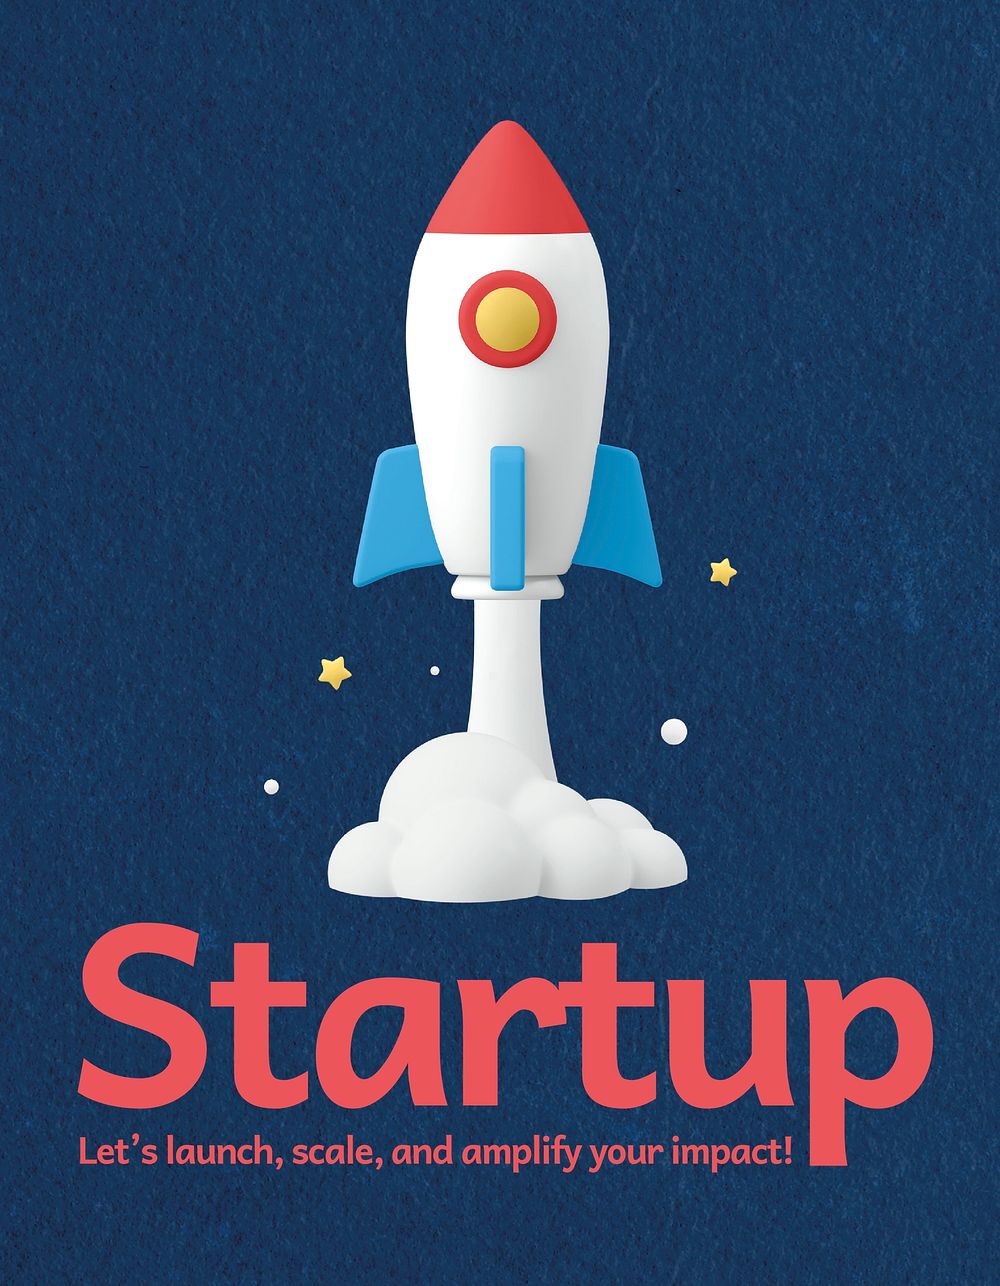 Startup business flyer template, rocket launch 3D illustration psd